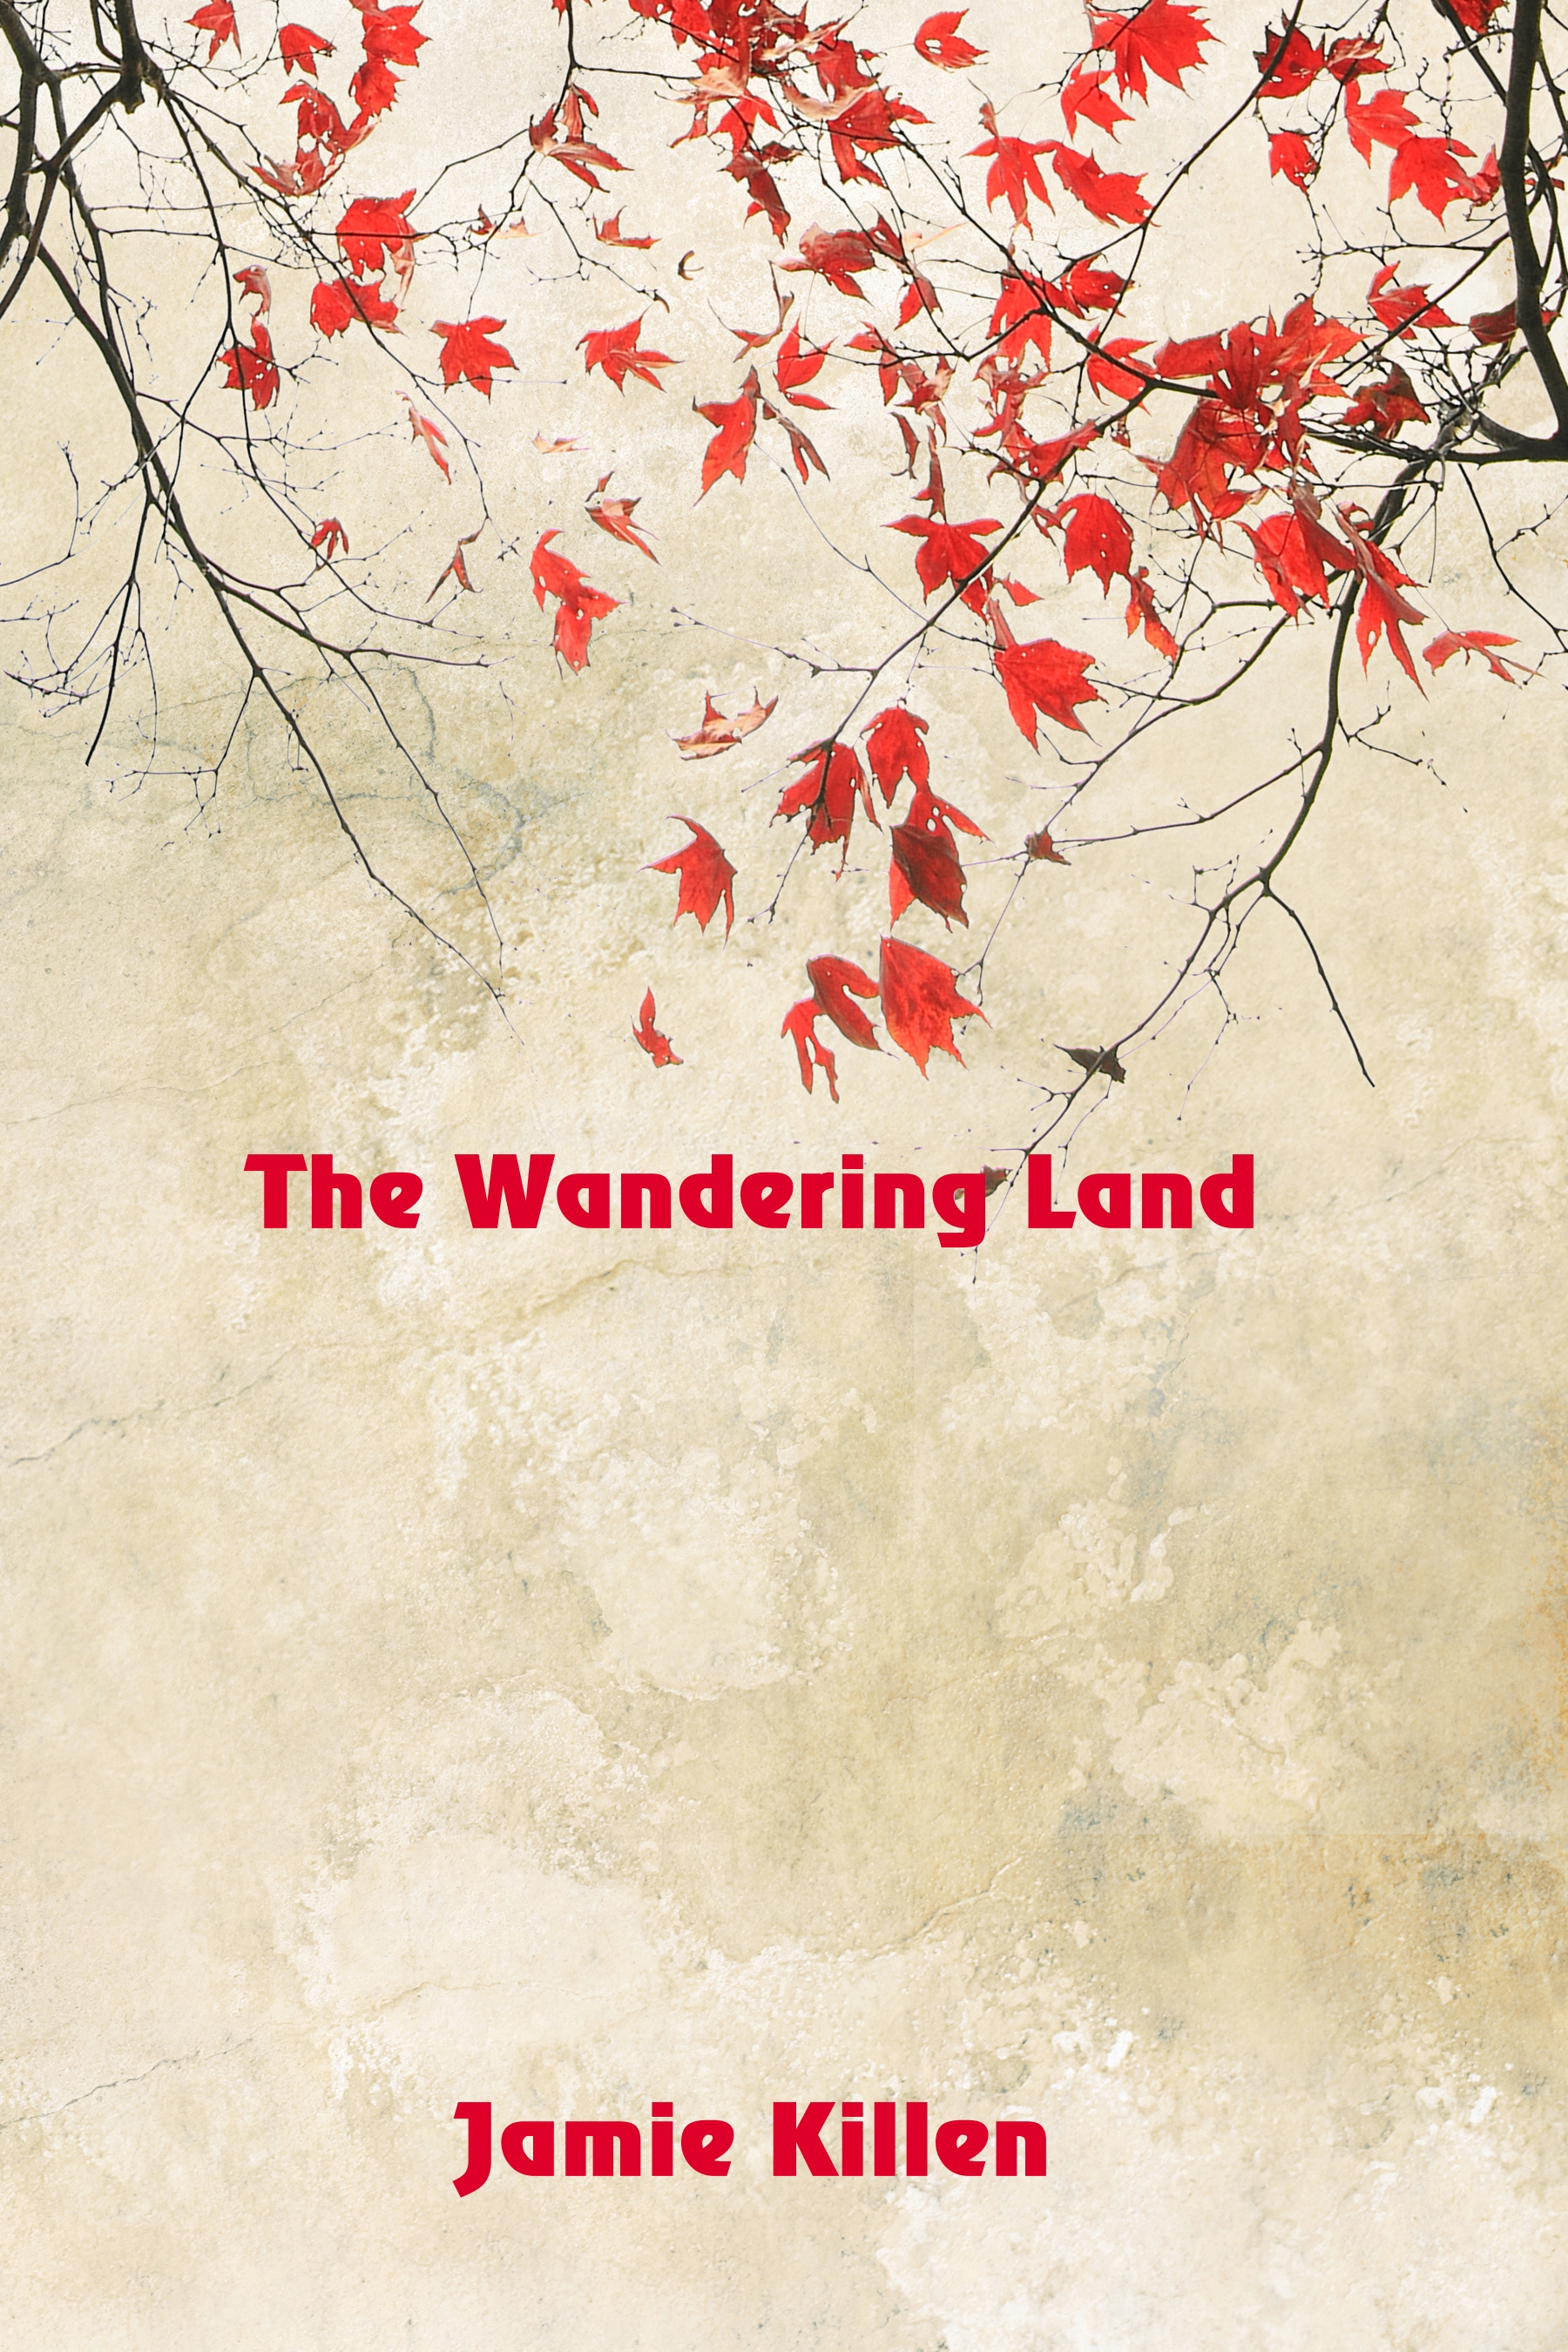 FREE: The Wandering Land by Jamie Killen